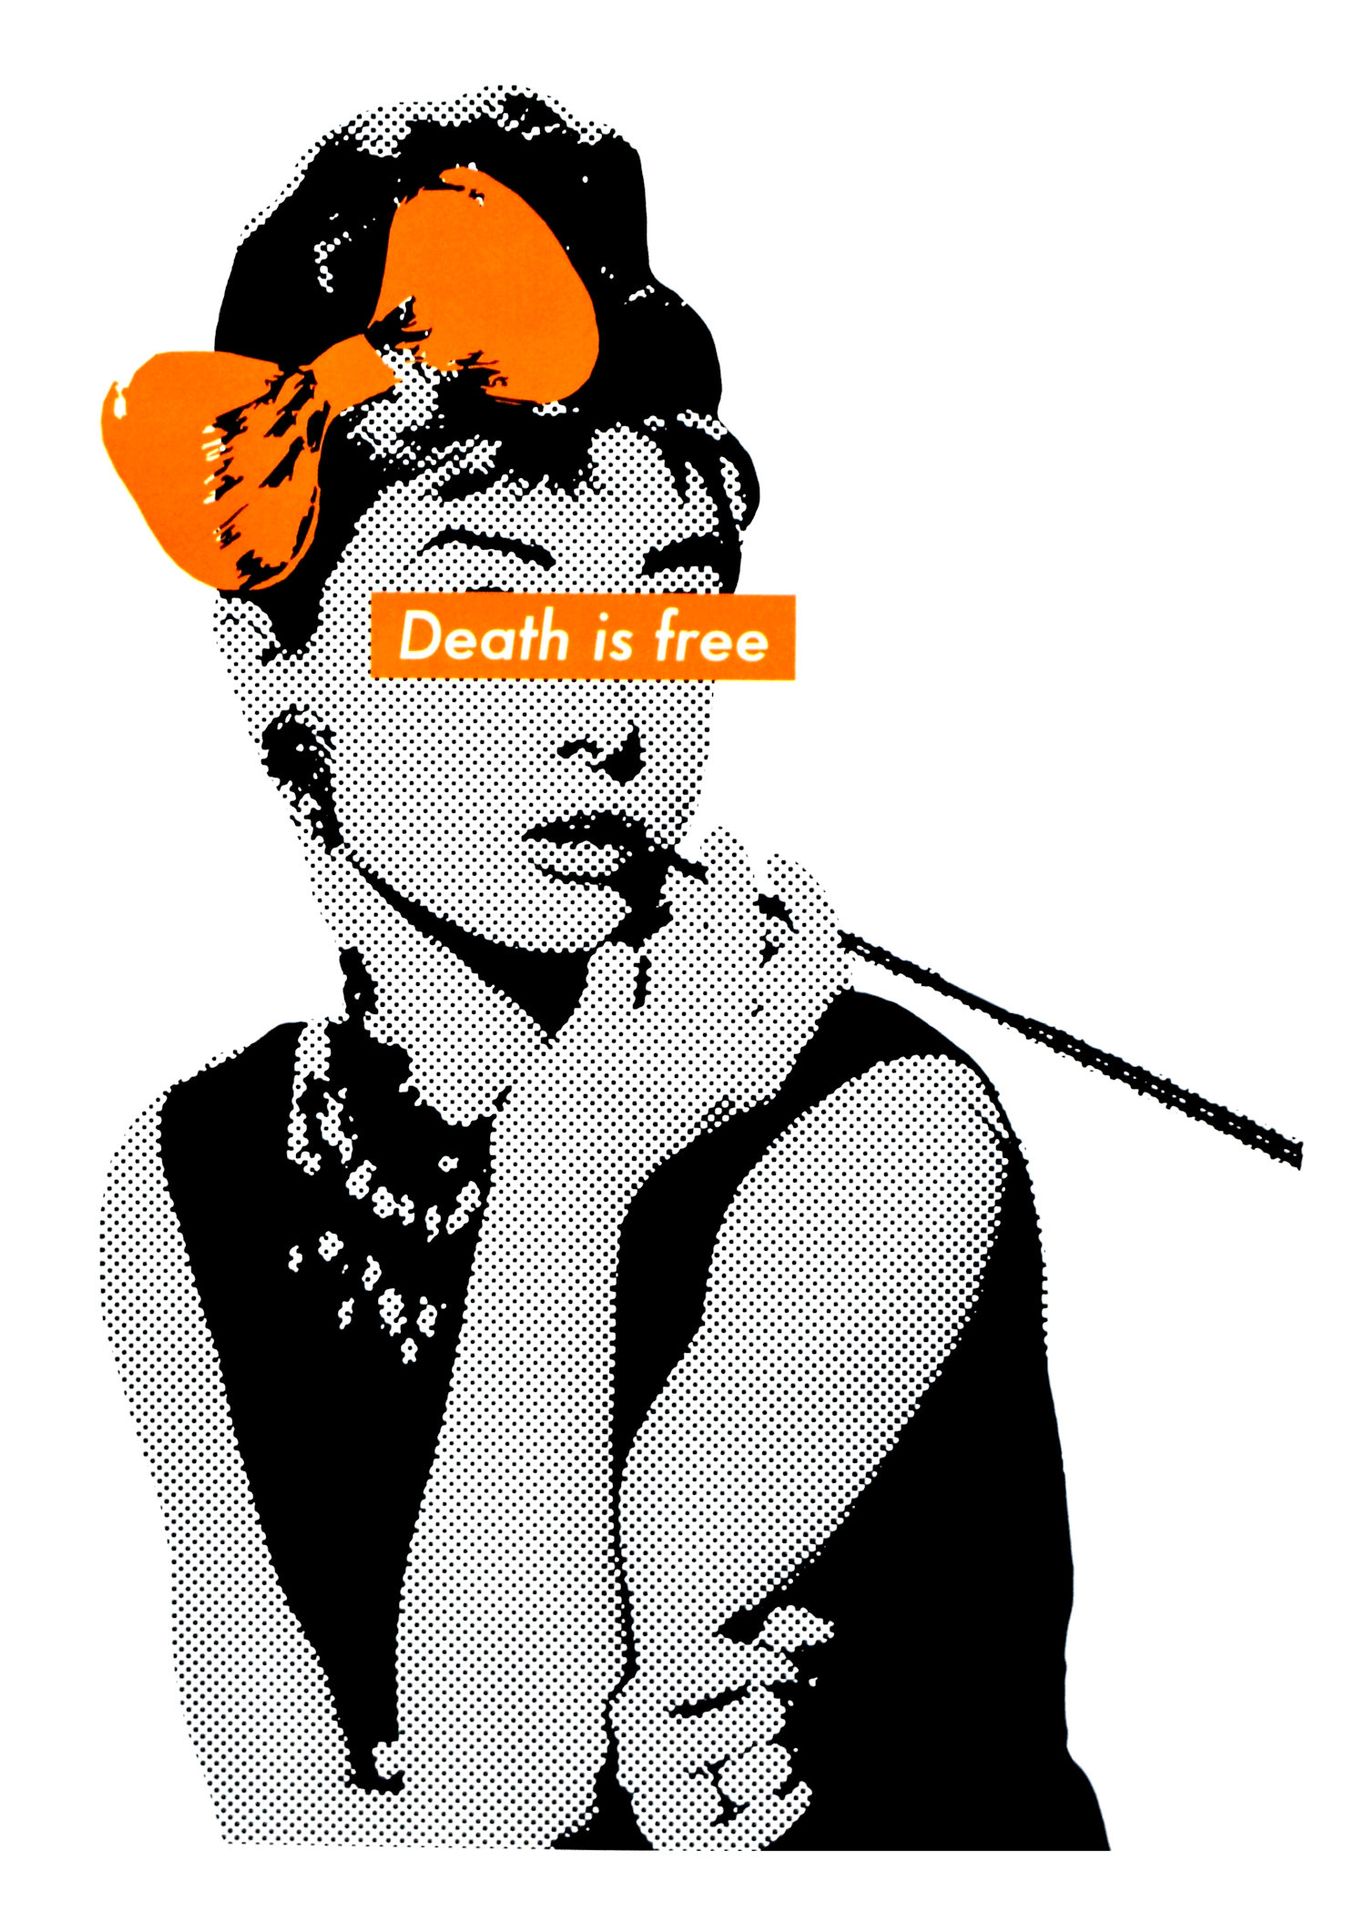 Death NYC Death NYC

Audrey Offset Orange 2015

Silkscreen print.

Limited editi&hellip;